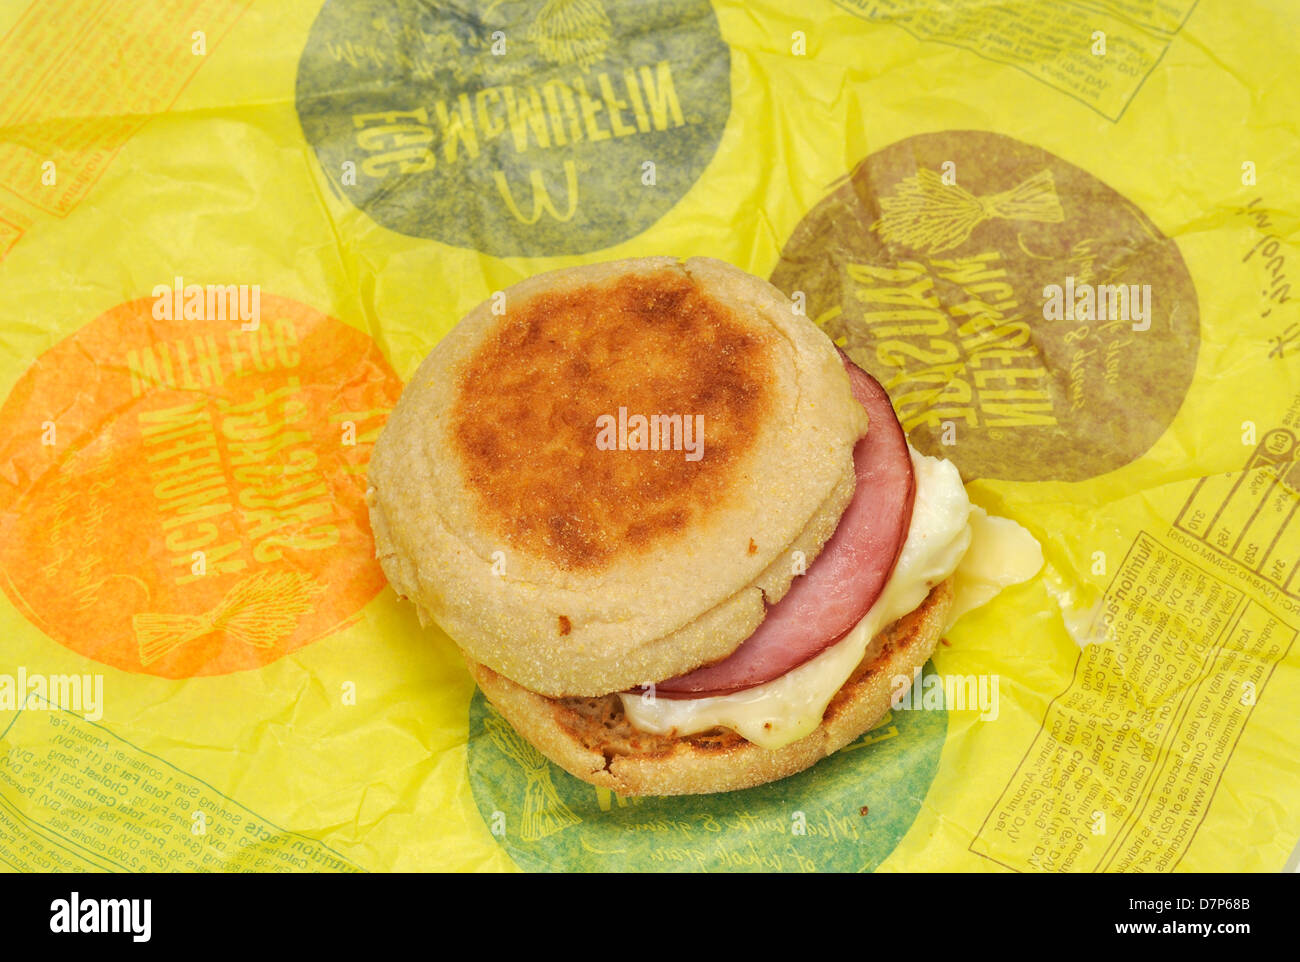 McDonald's Eiweiß Freude McMuffin Frühstücks-Sandwich auf Papierverpackung ausgeschnitten. USA Stockfoto